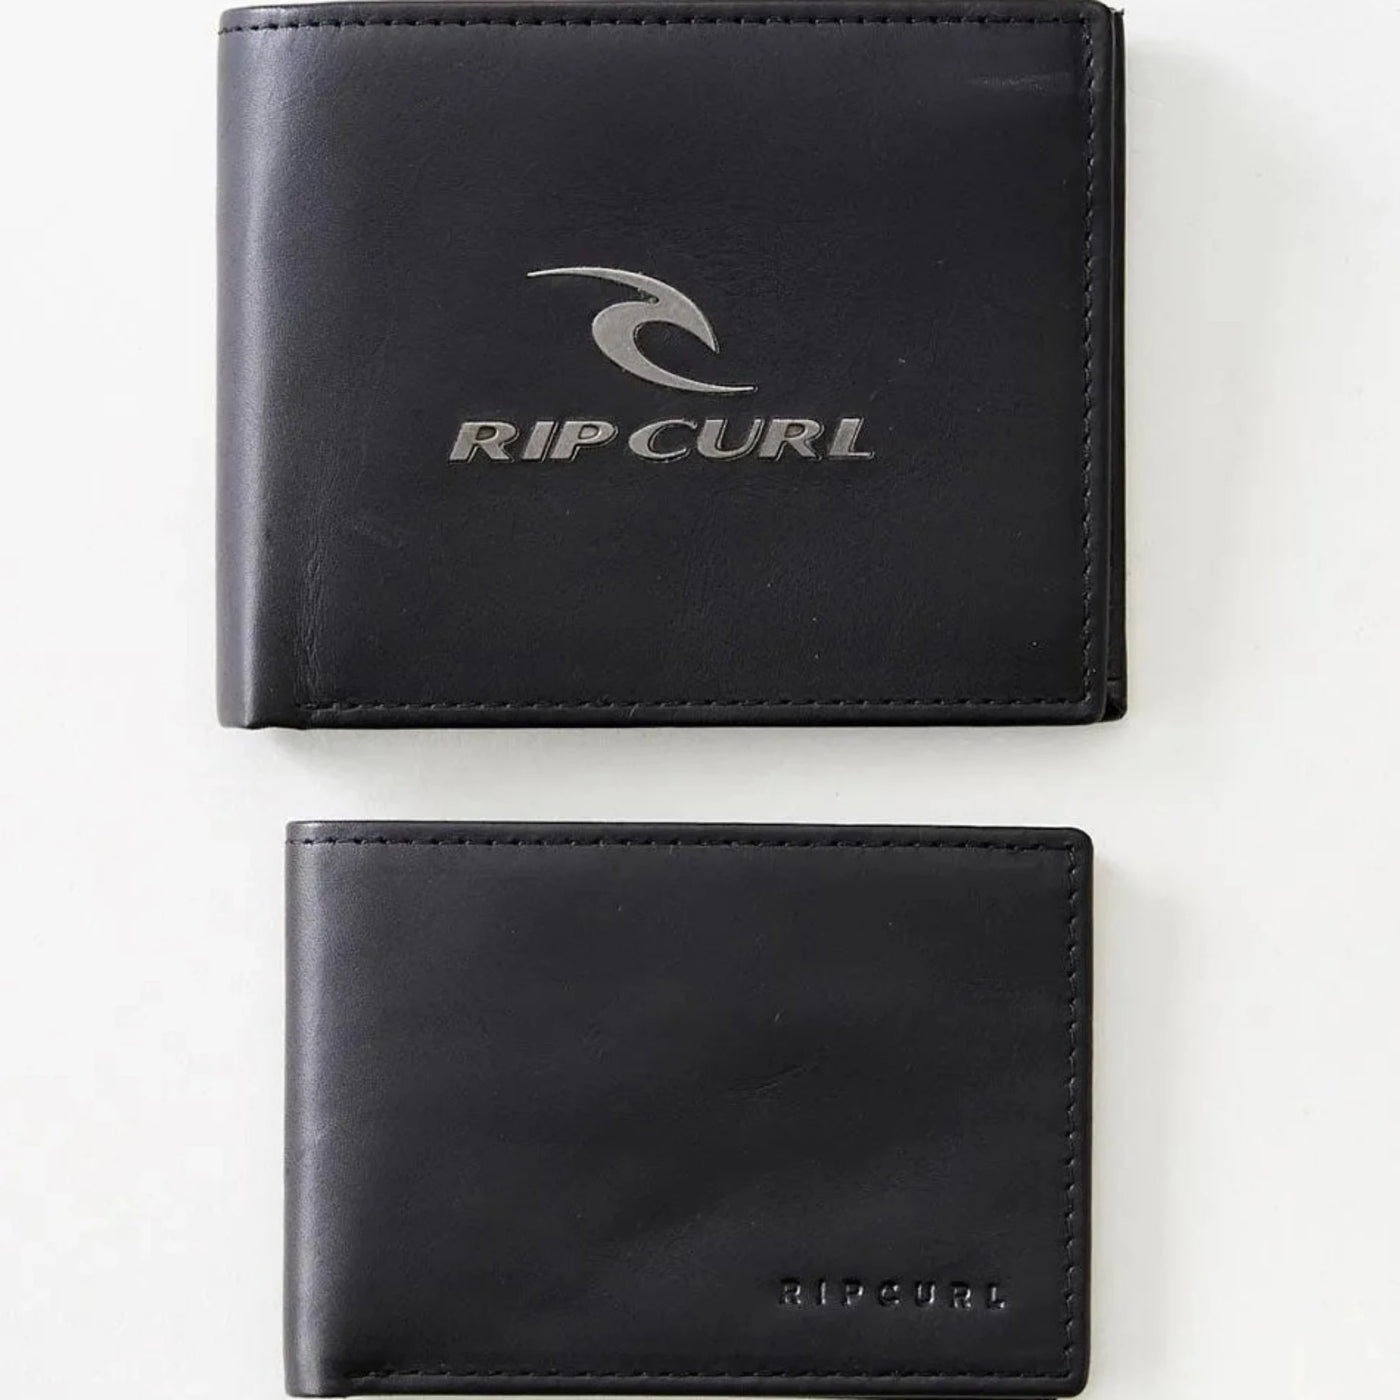 Rip Curl Corpwatu RFID 2 in 1 Wallet - Black